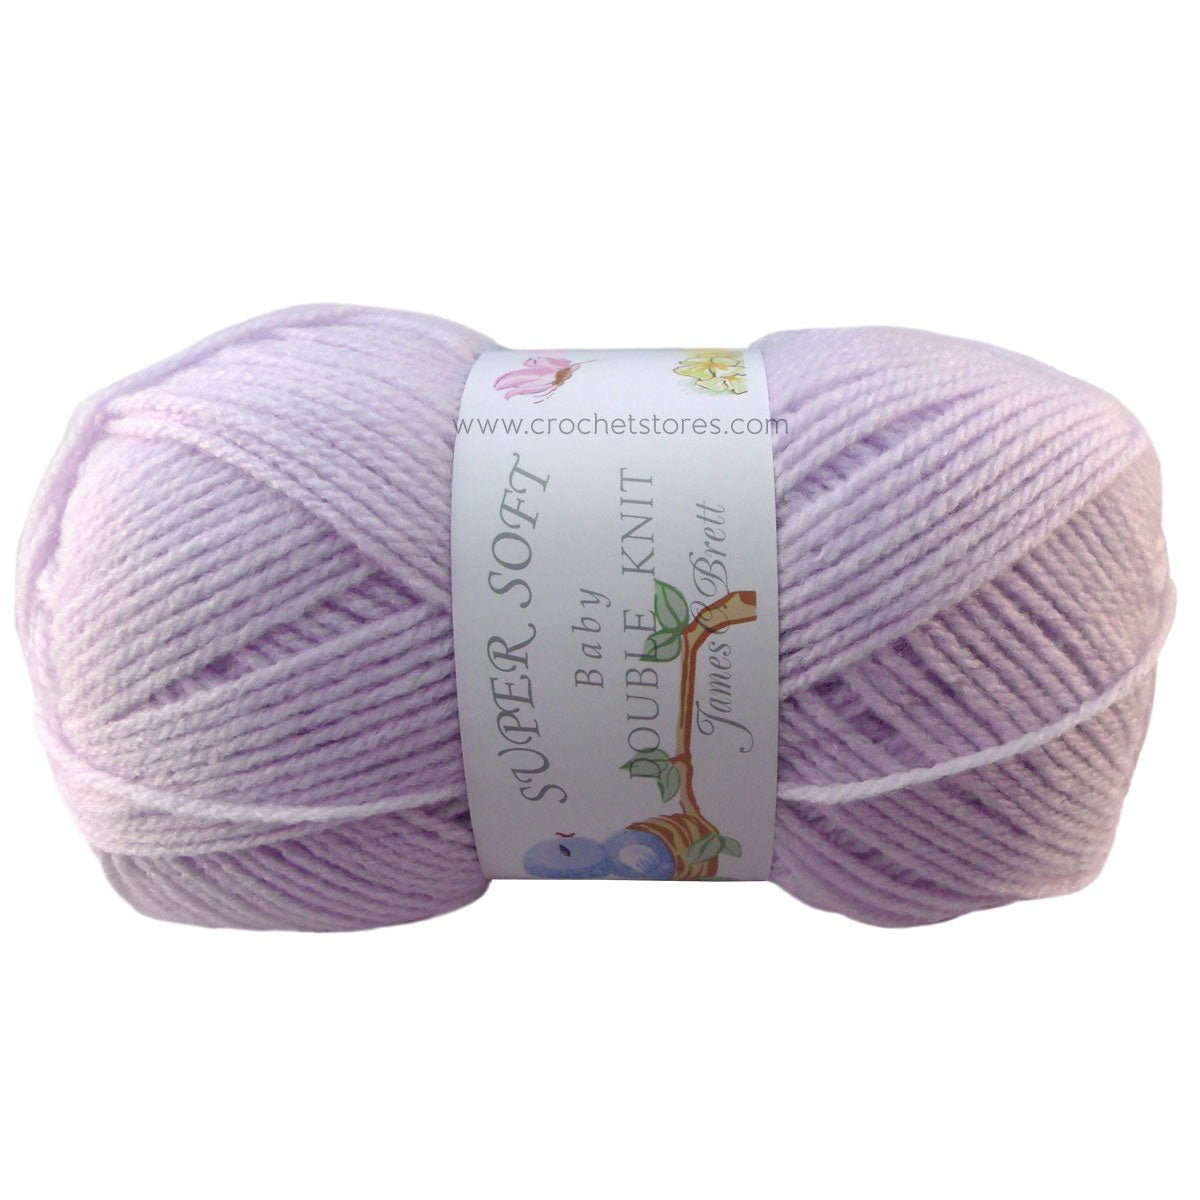 SUPER SOFT - CrochetstoresBB35060019090114